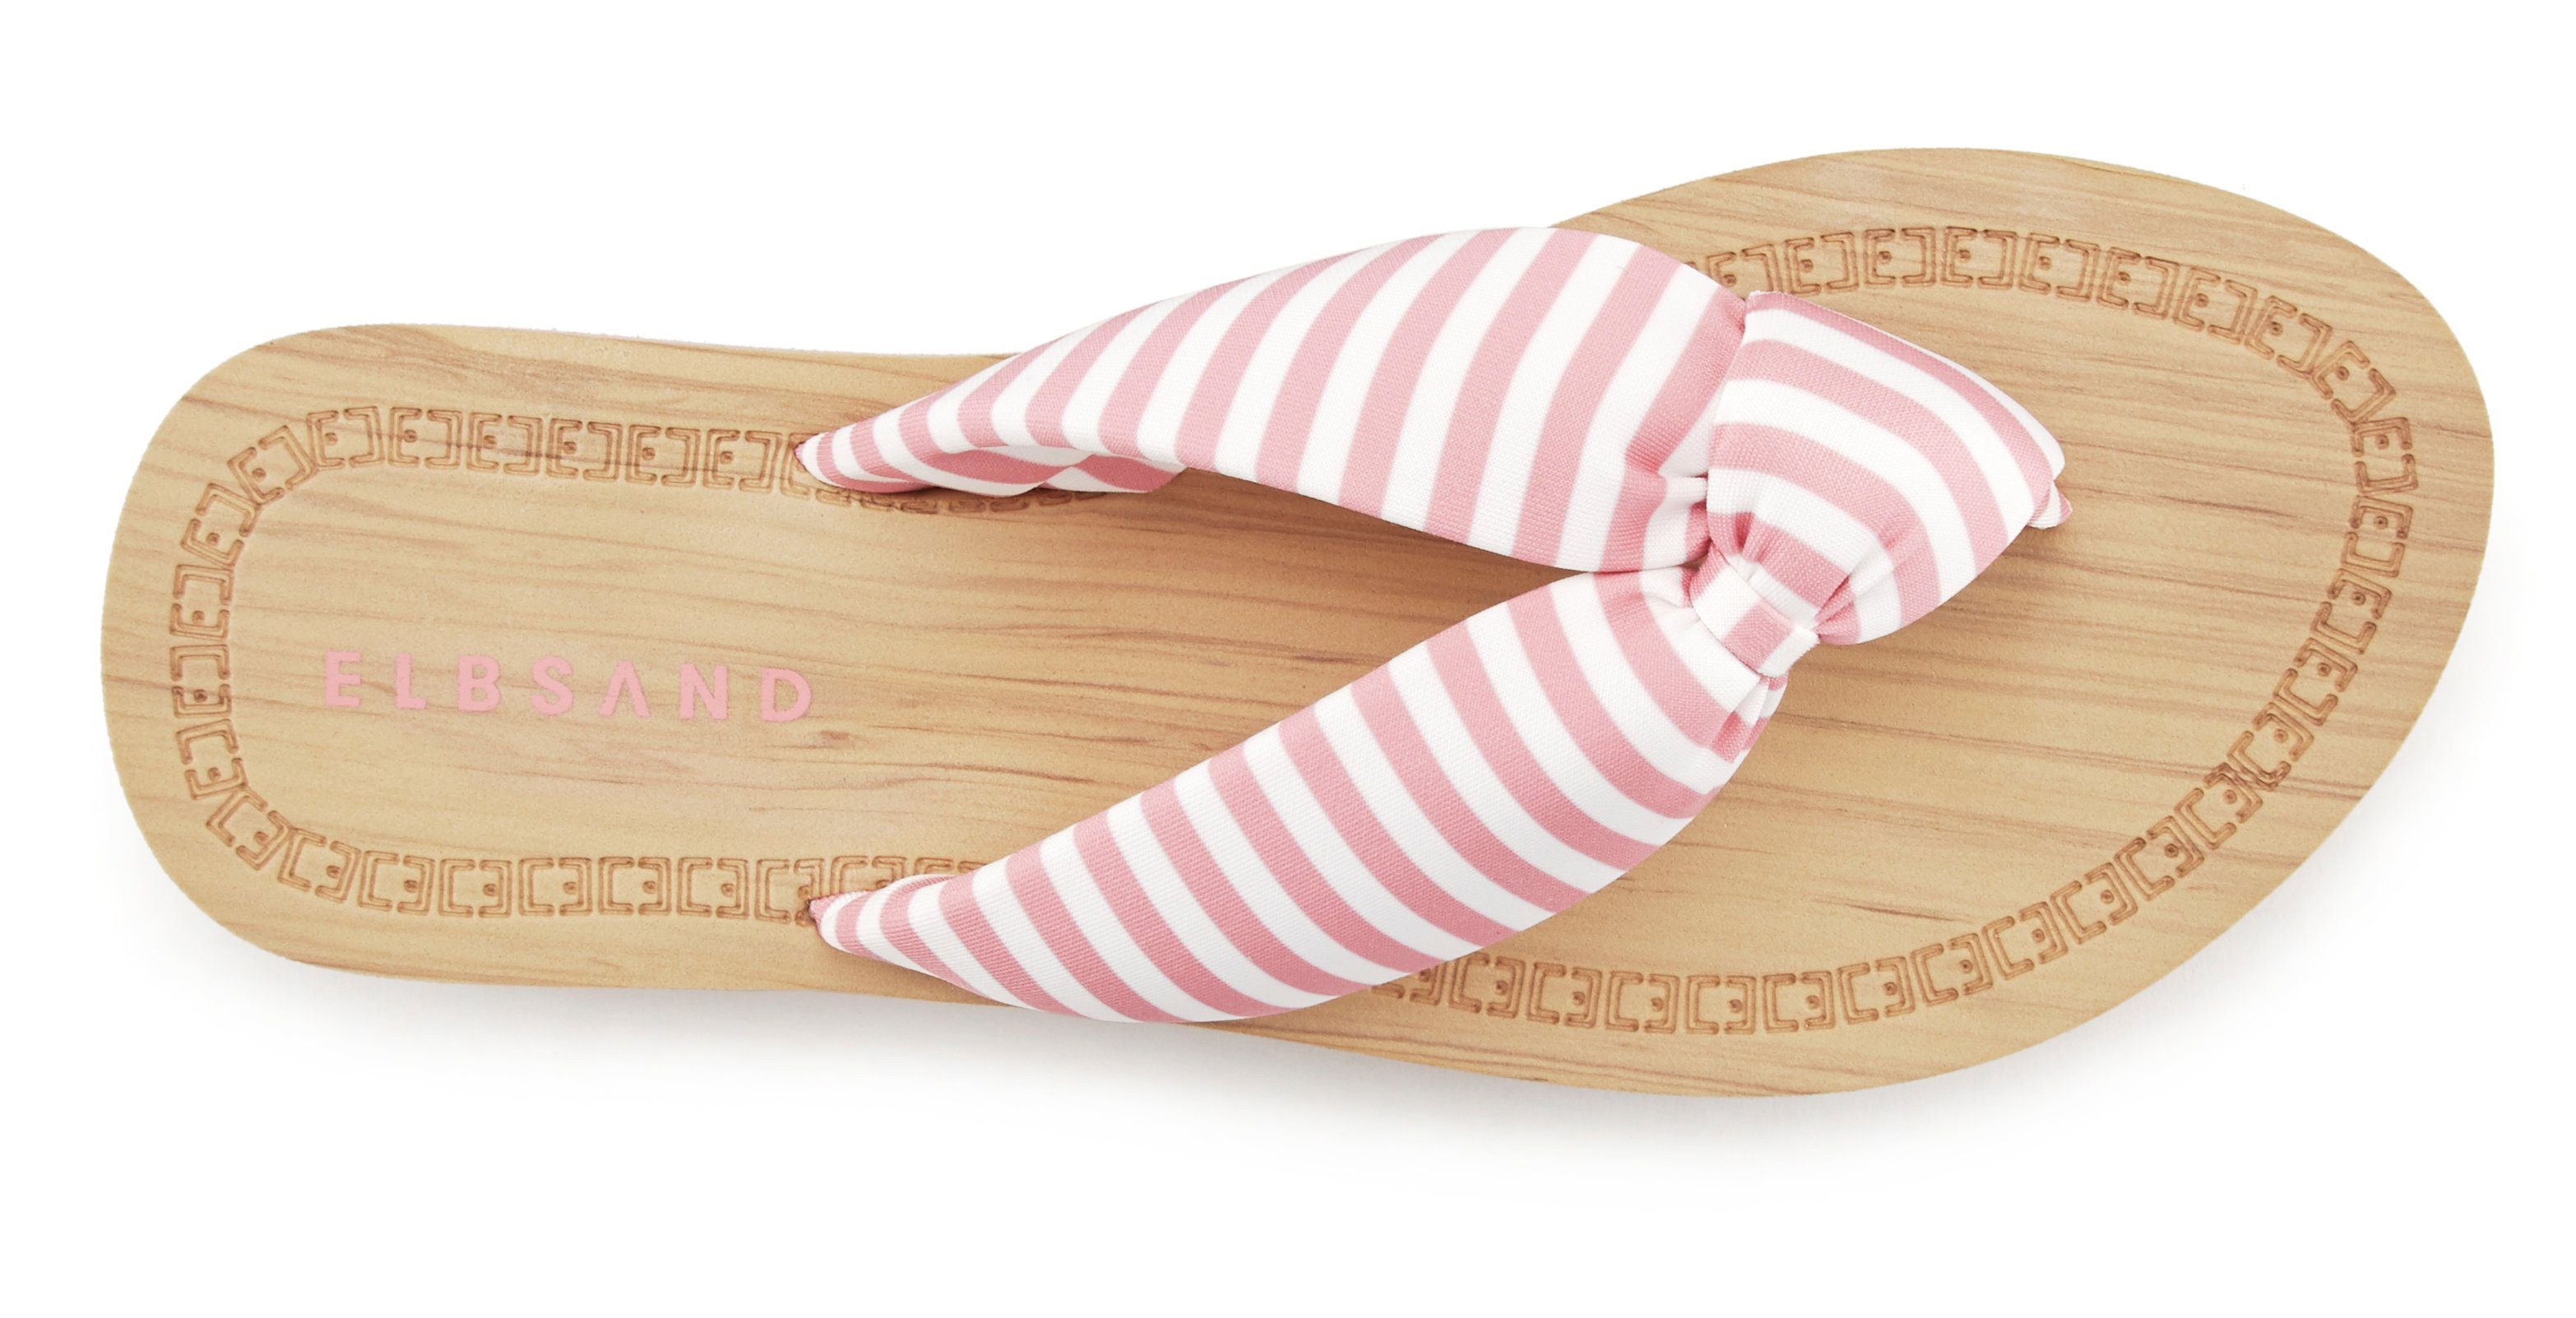 Elbsand ultraleicht Badeschuh Badezehentrenner VEGAN Pantolette, rosa-gestreift Sandale,